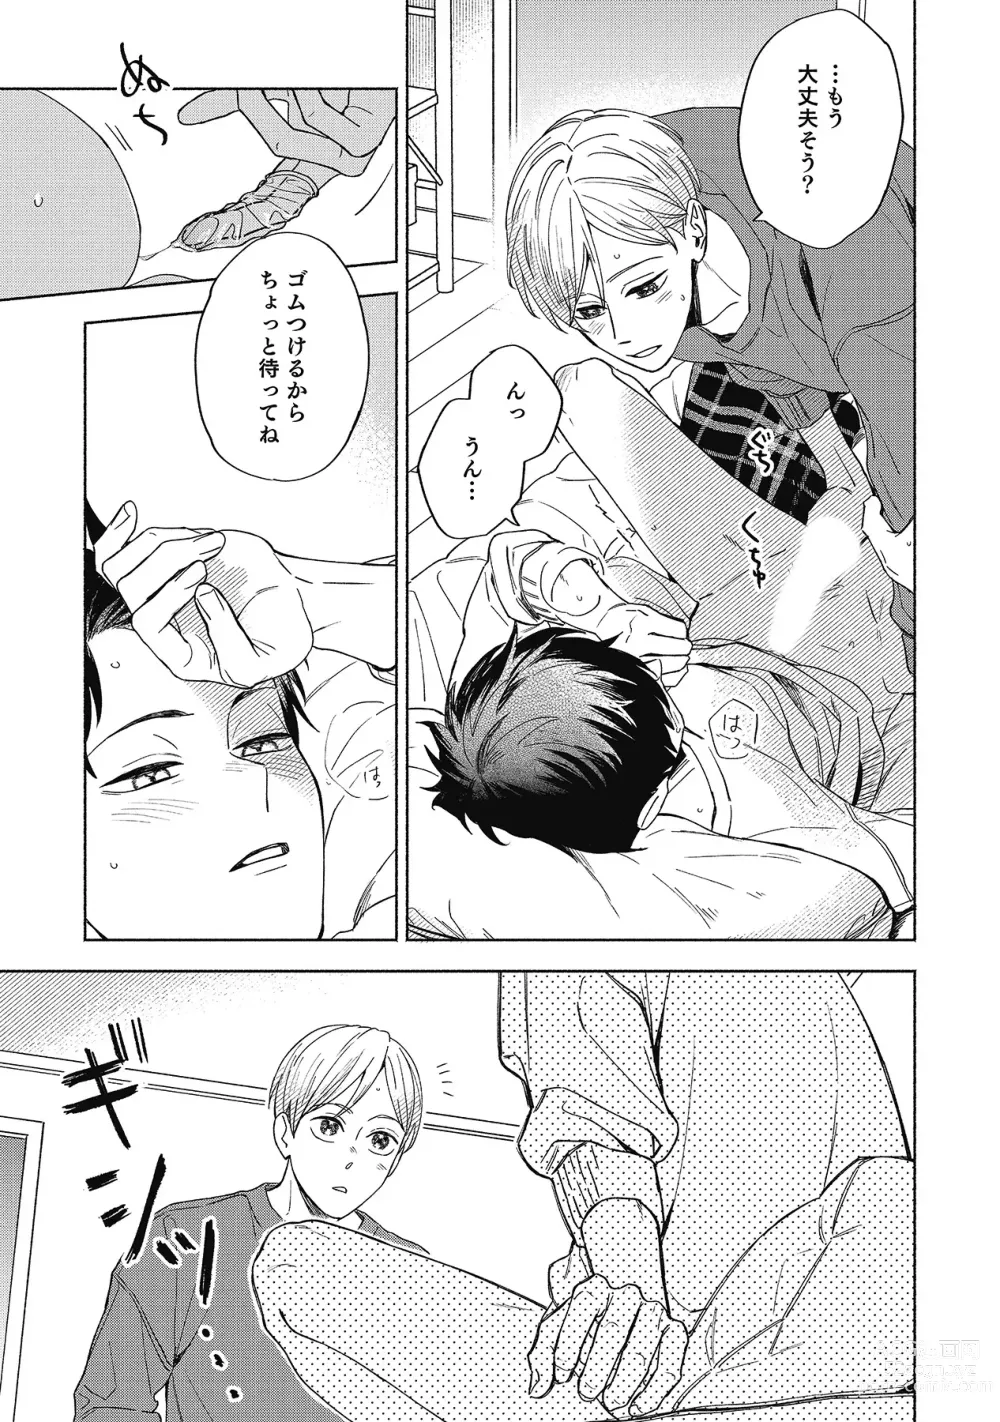 Page 161 of manga Sentimental Darling